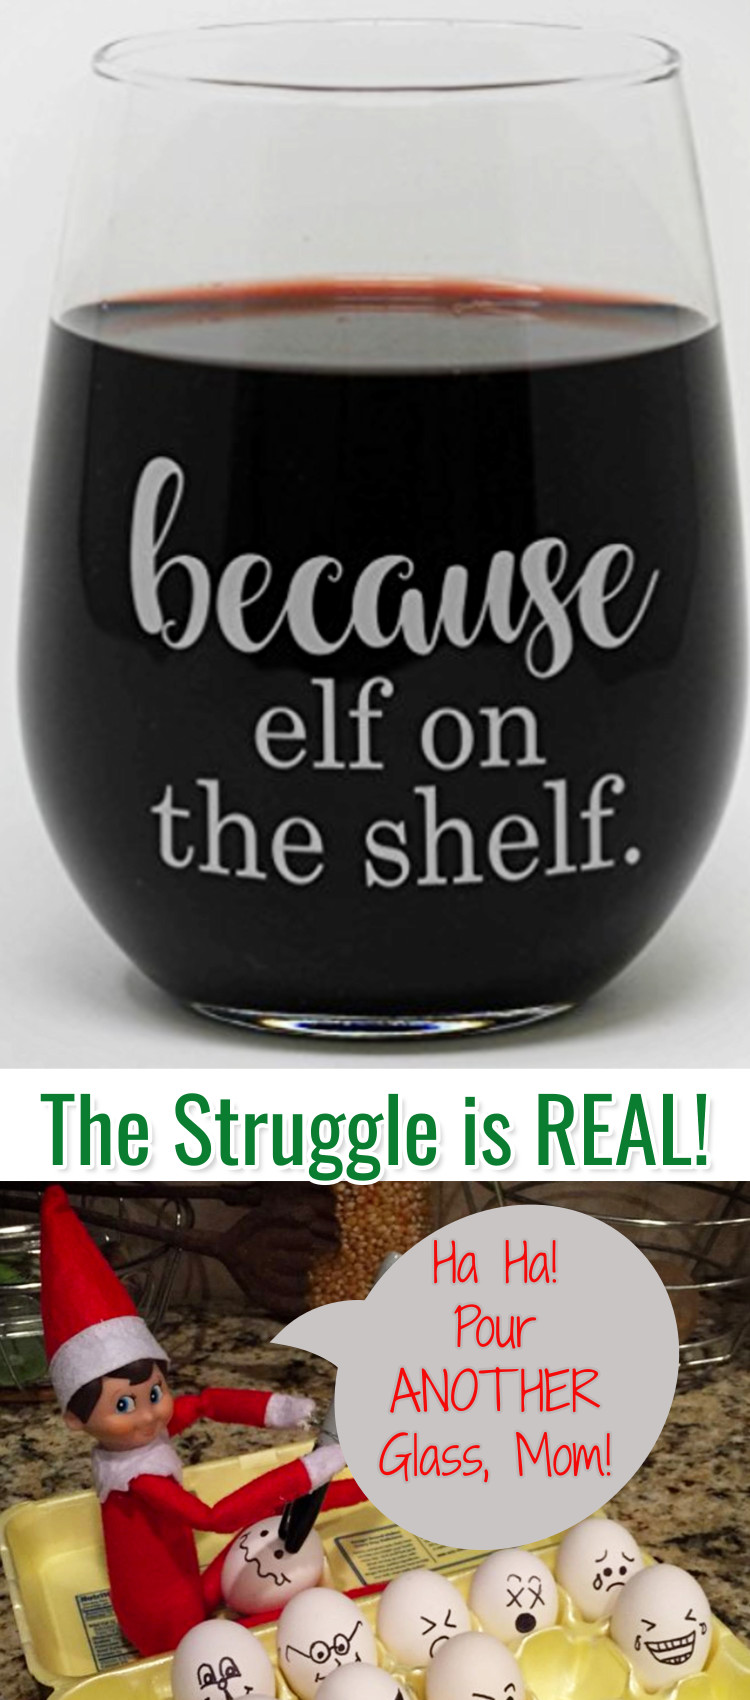 Funny Elf on the Shelf Ideas!  ALL Moms deserve this Elf on the Shelf wine glass!